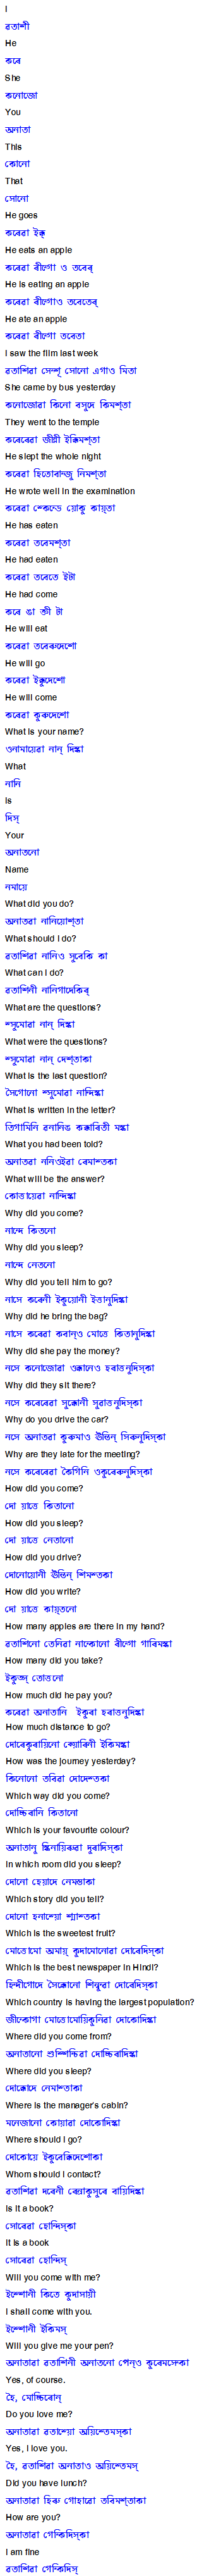 Learn Japanese through Assamese